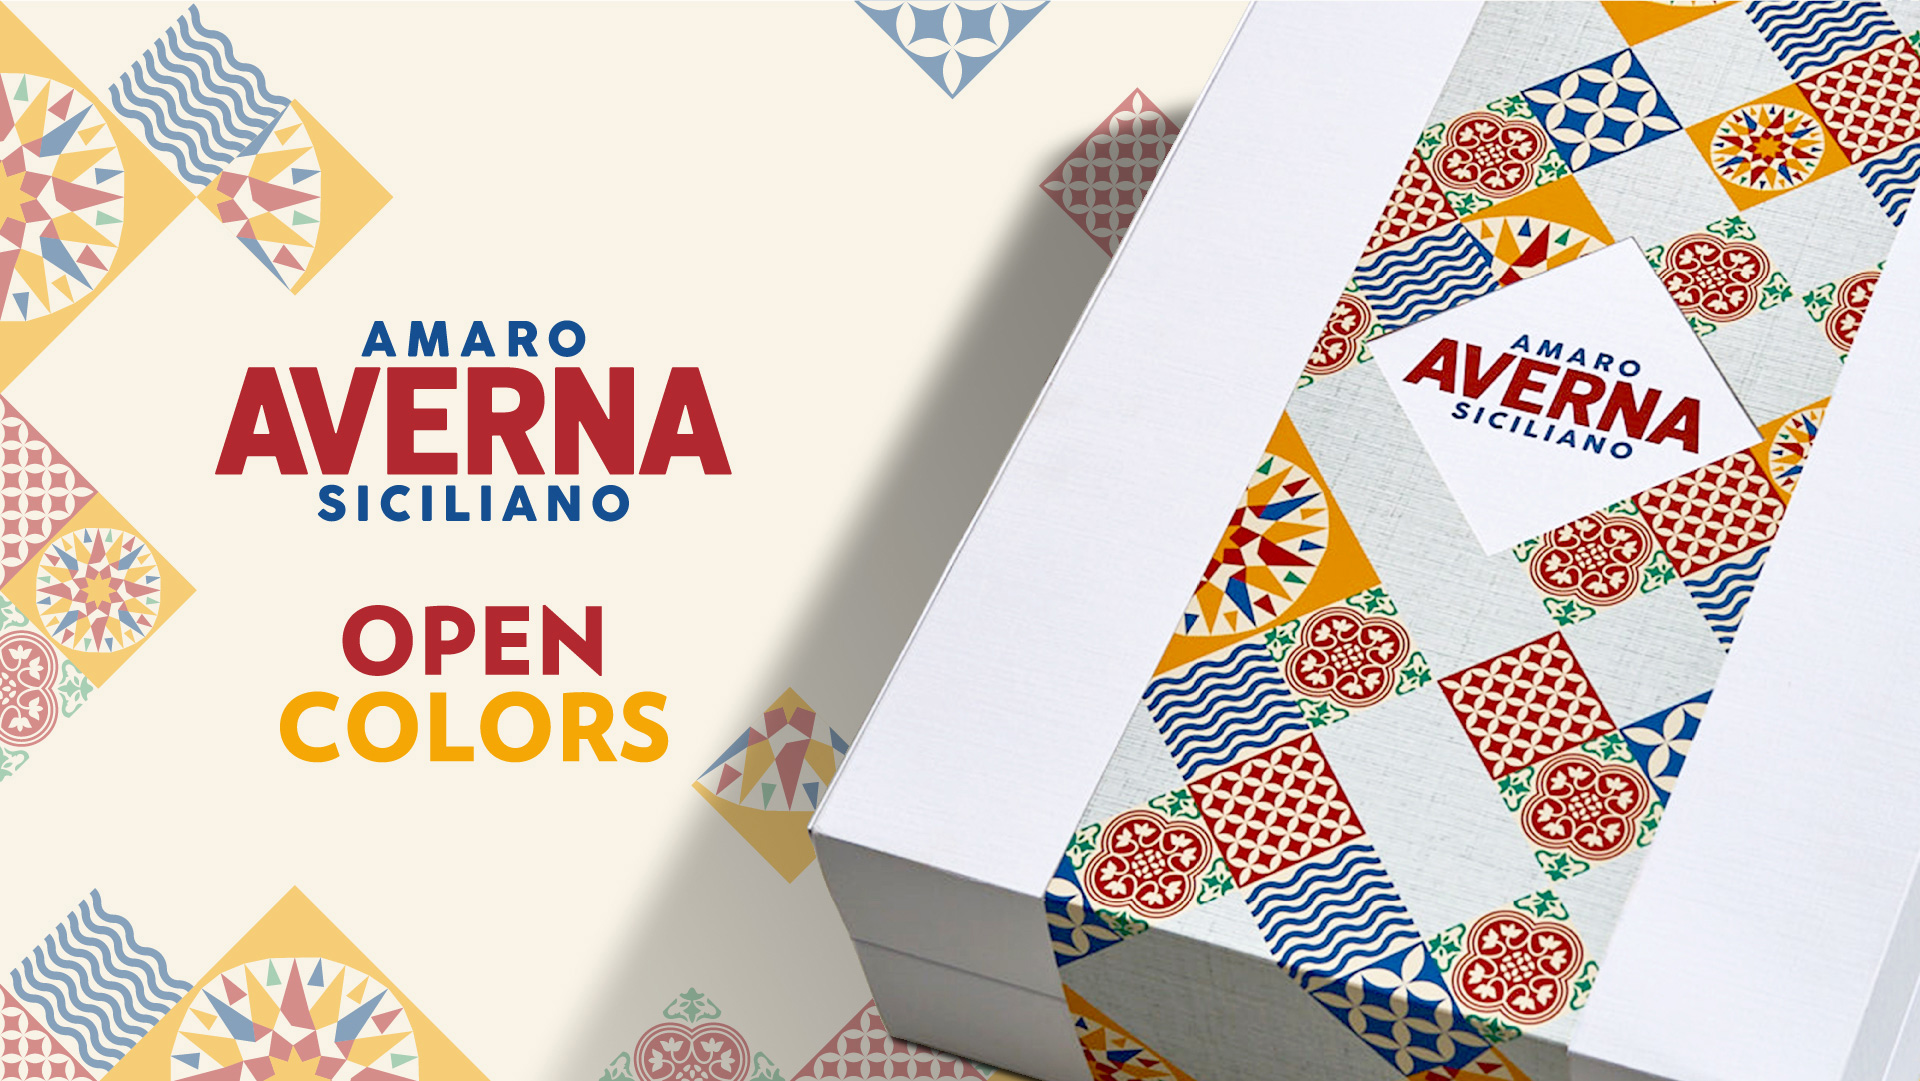 Amaro Averna Open Colors 